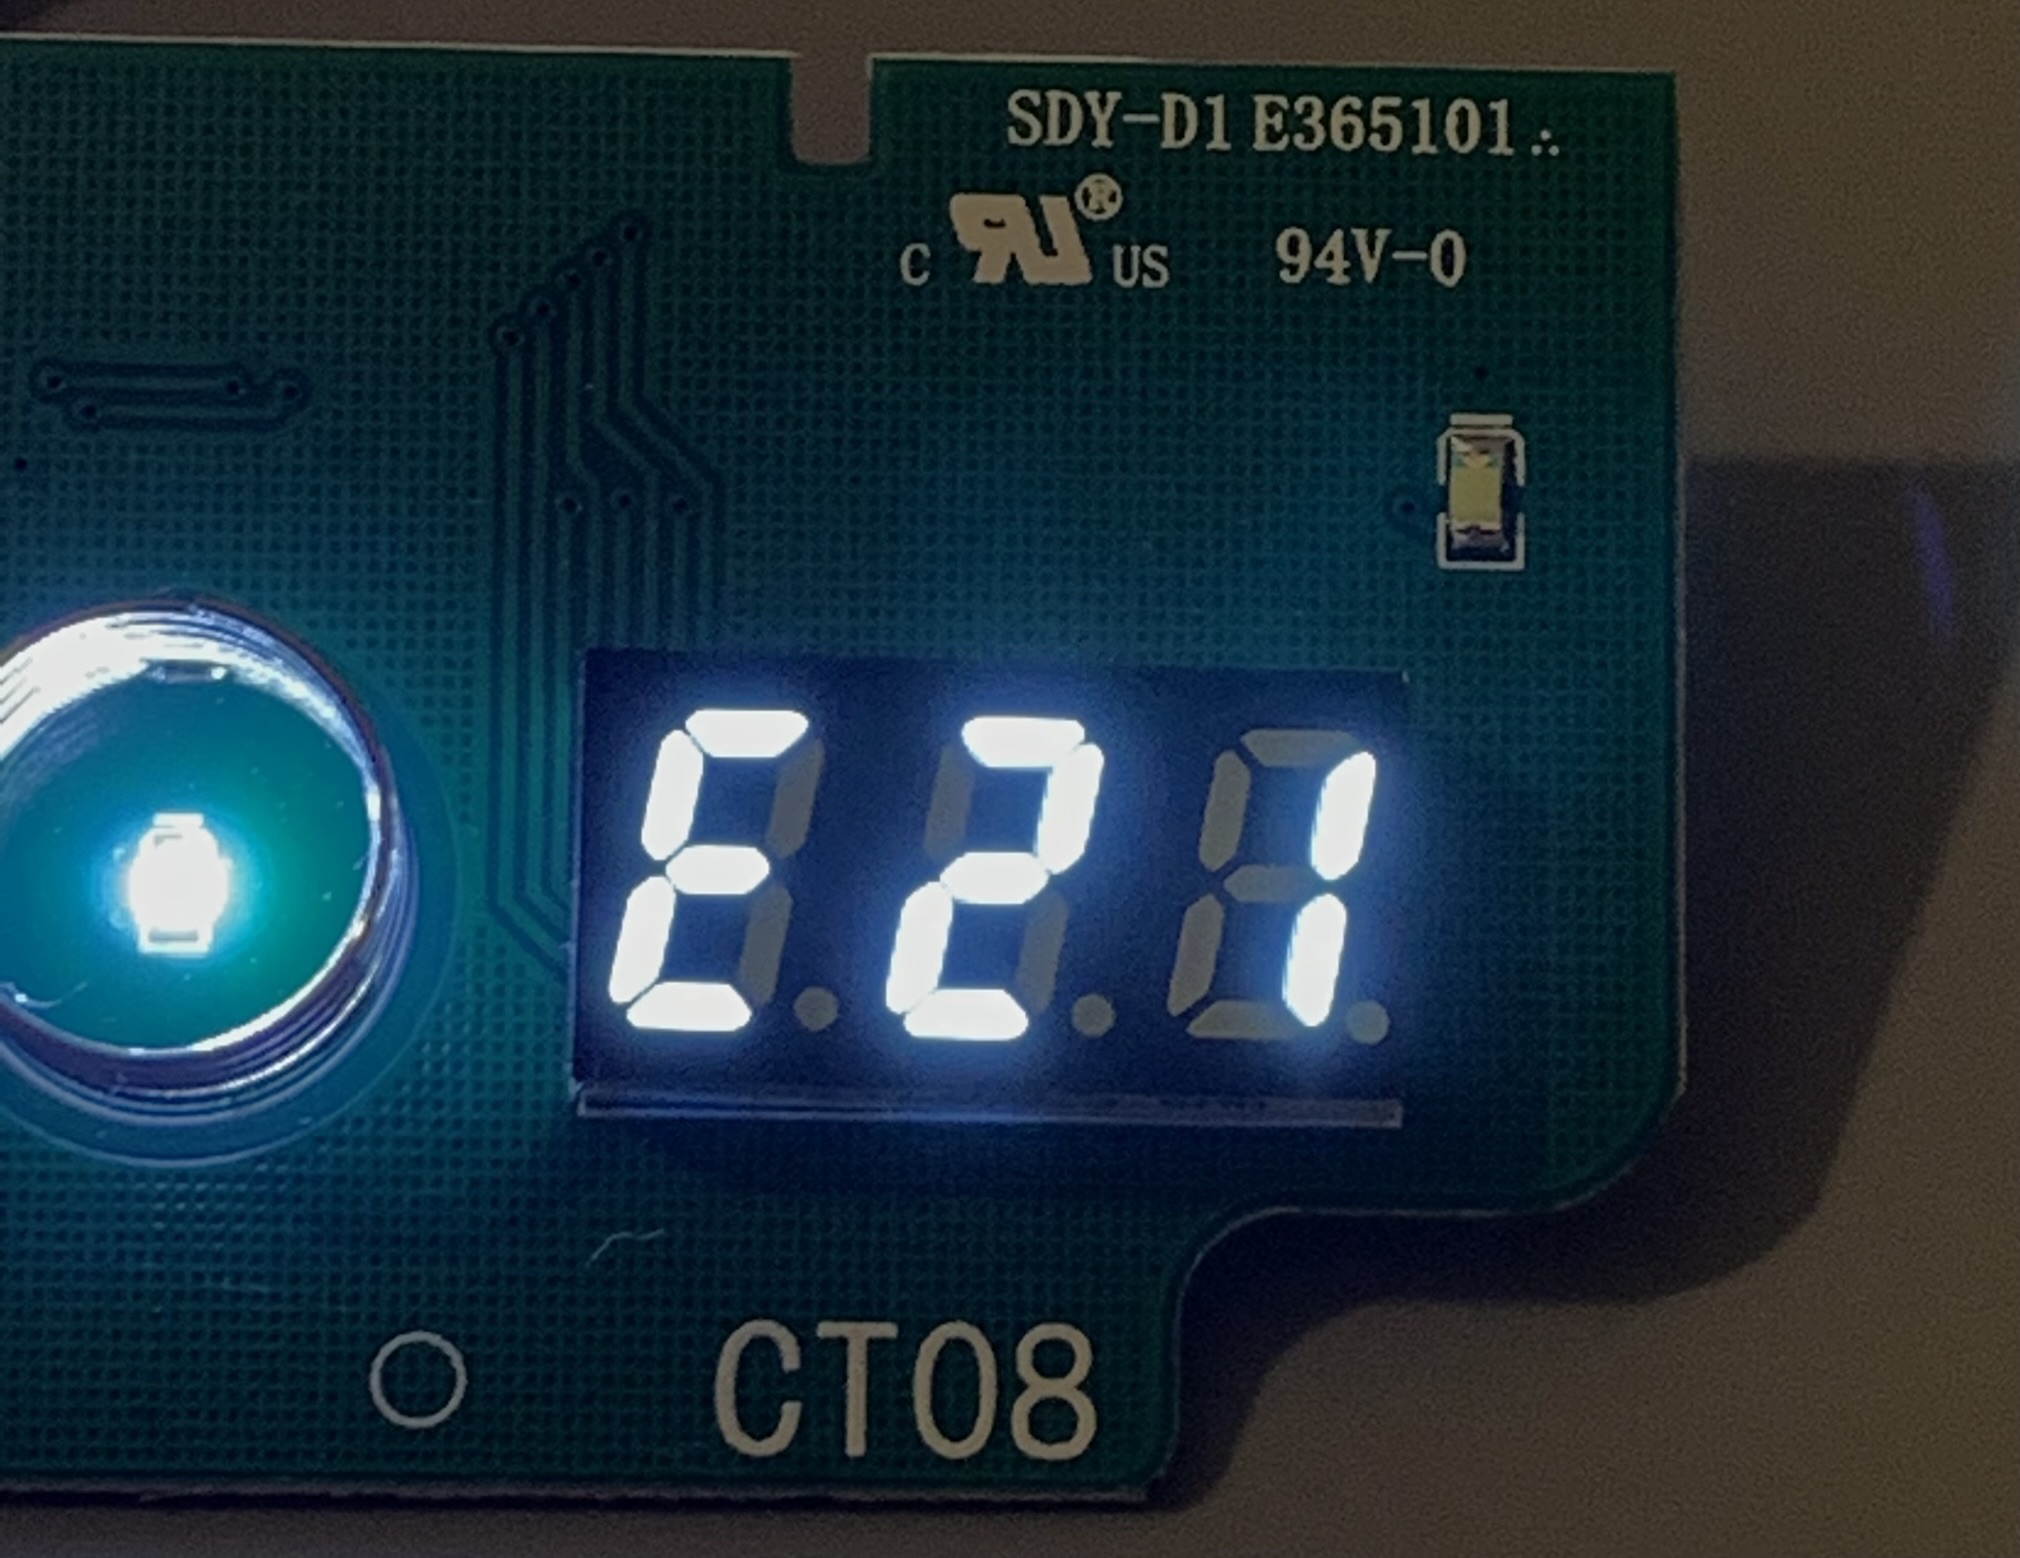 Interface displaying E21